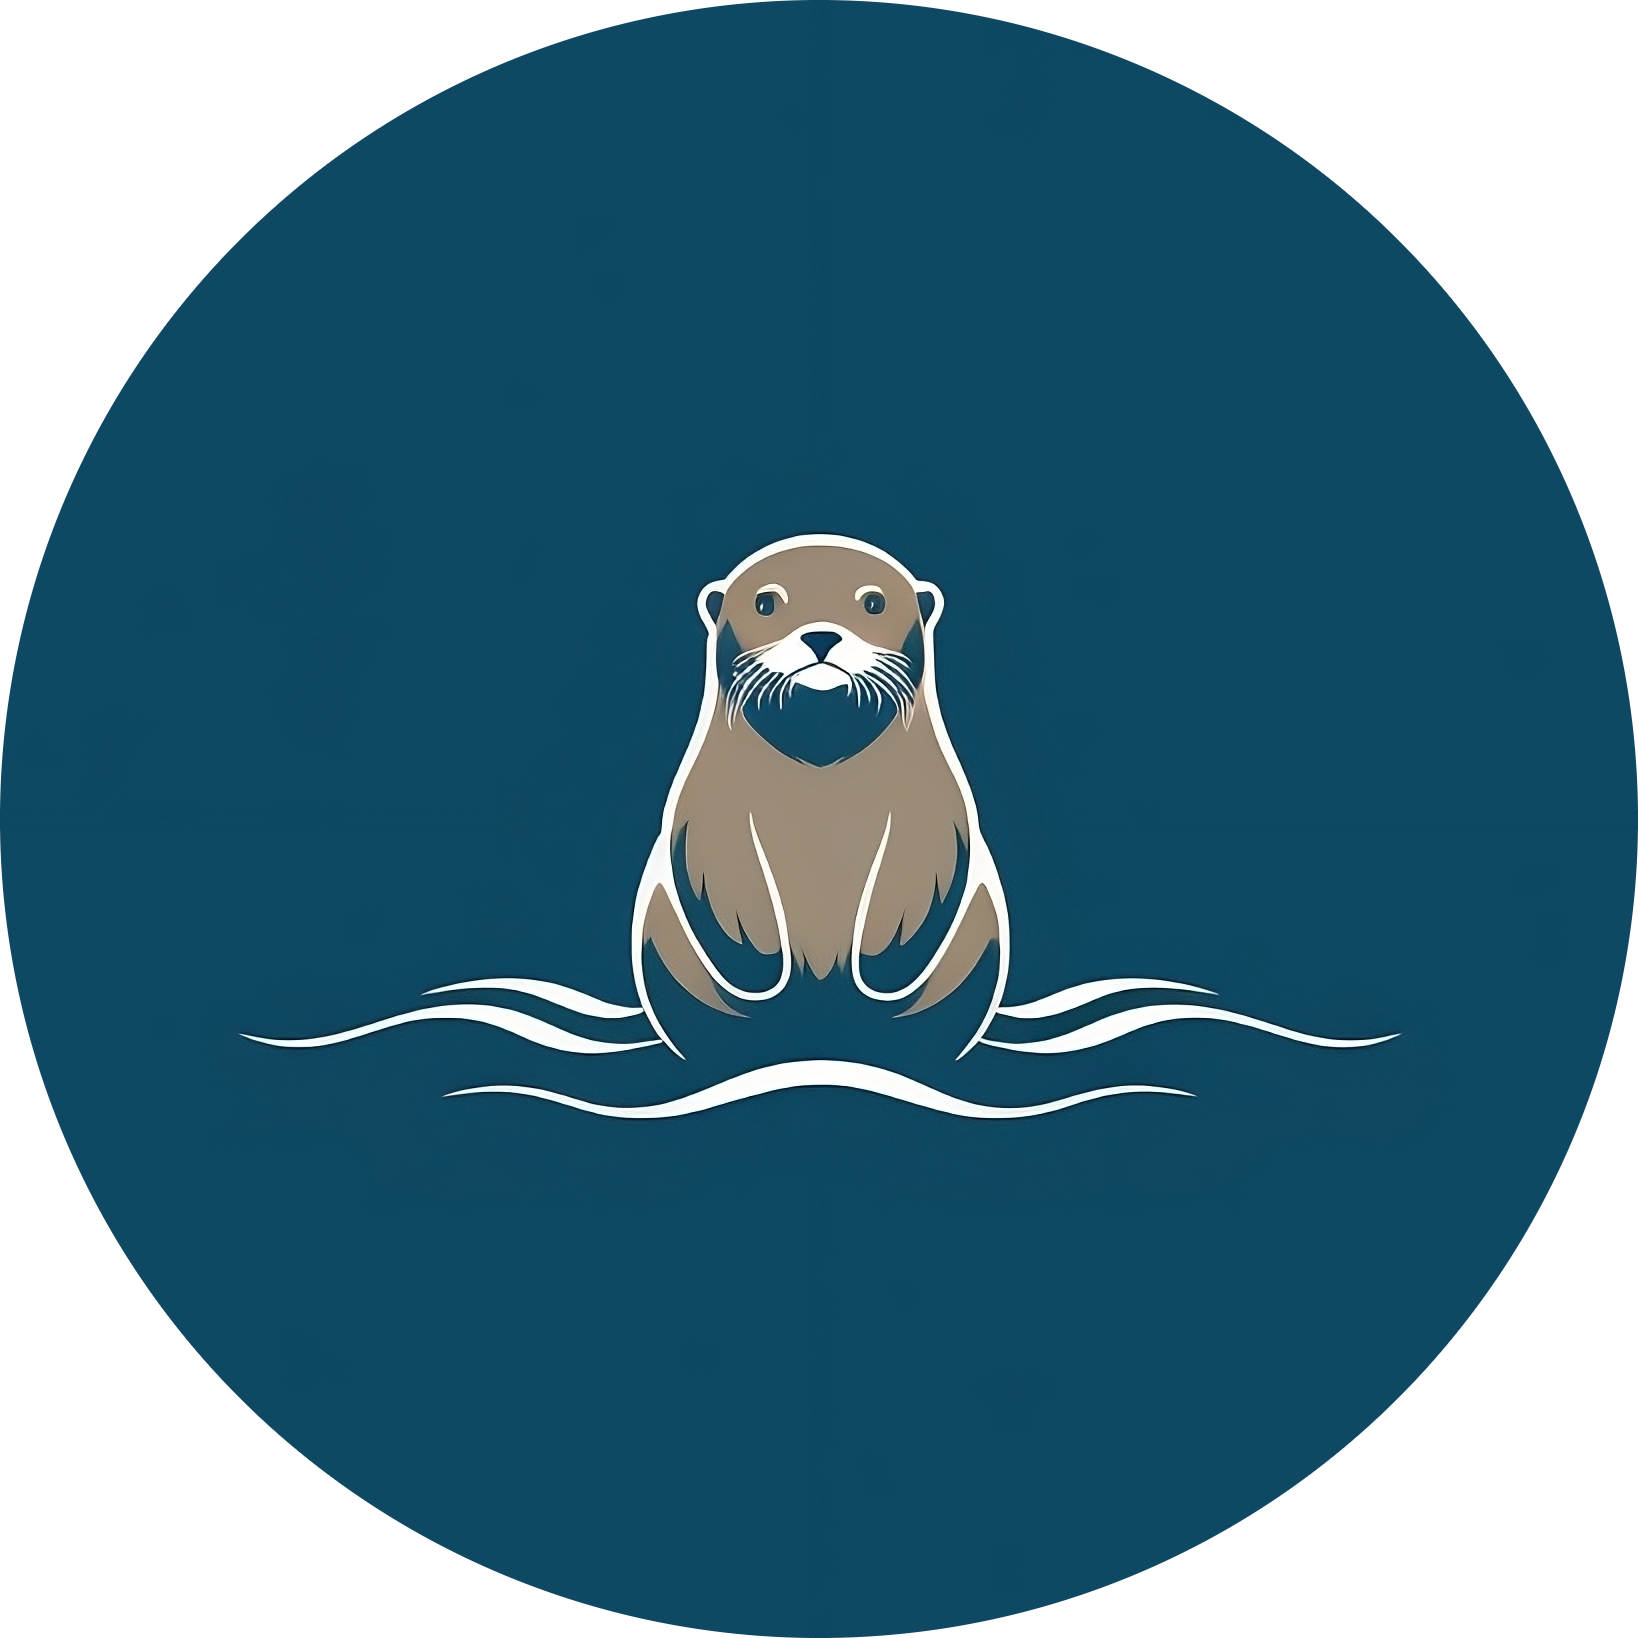 Otter Trends logo featuring an otter inside a circle.